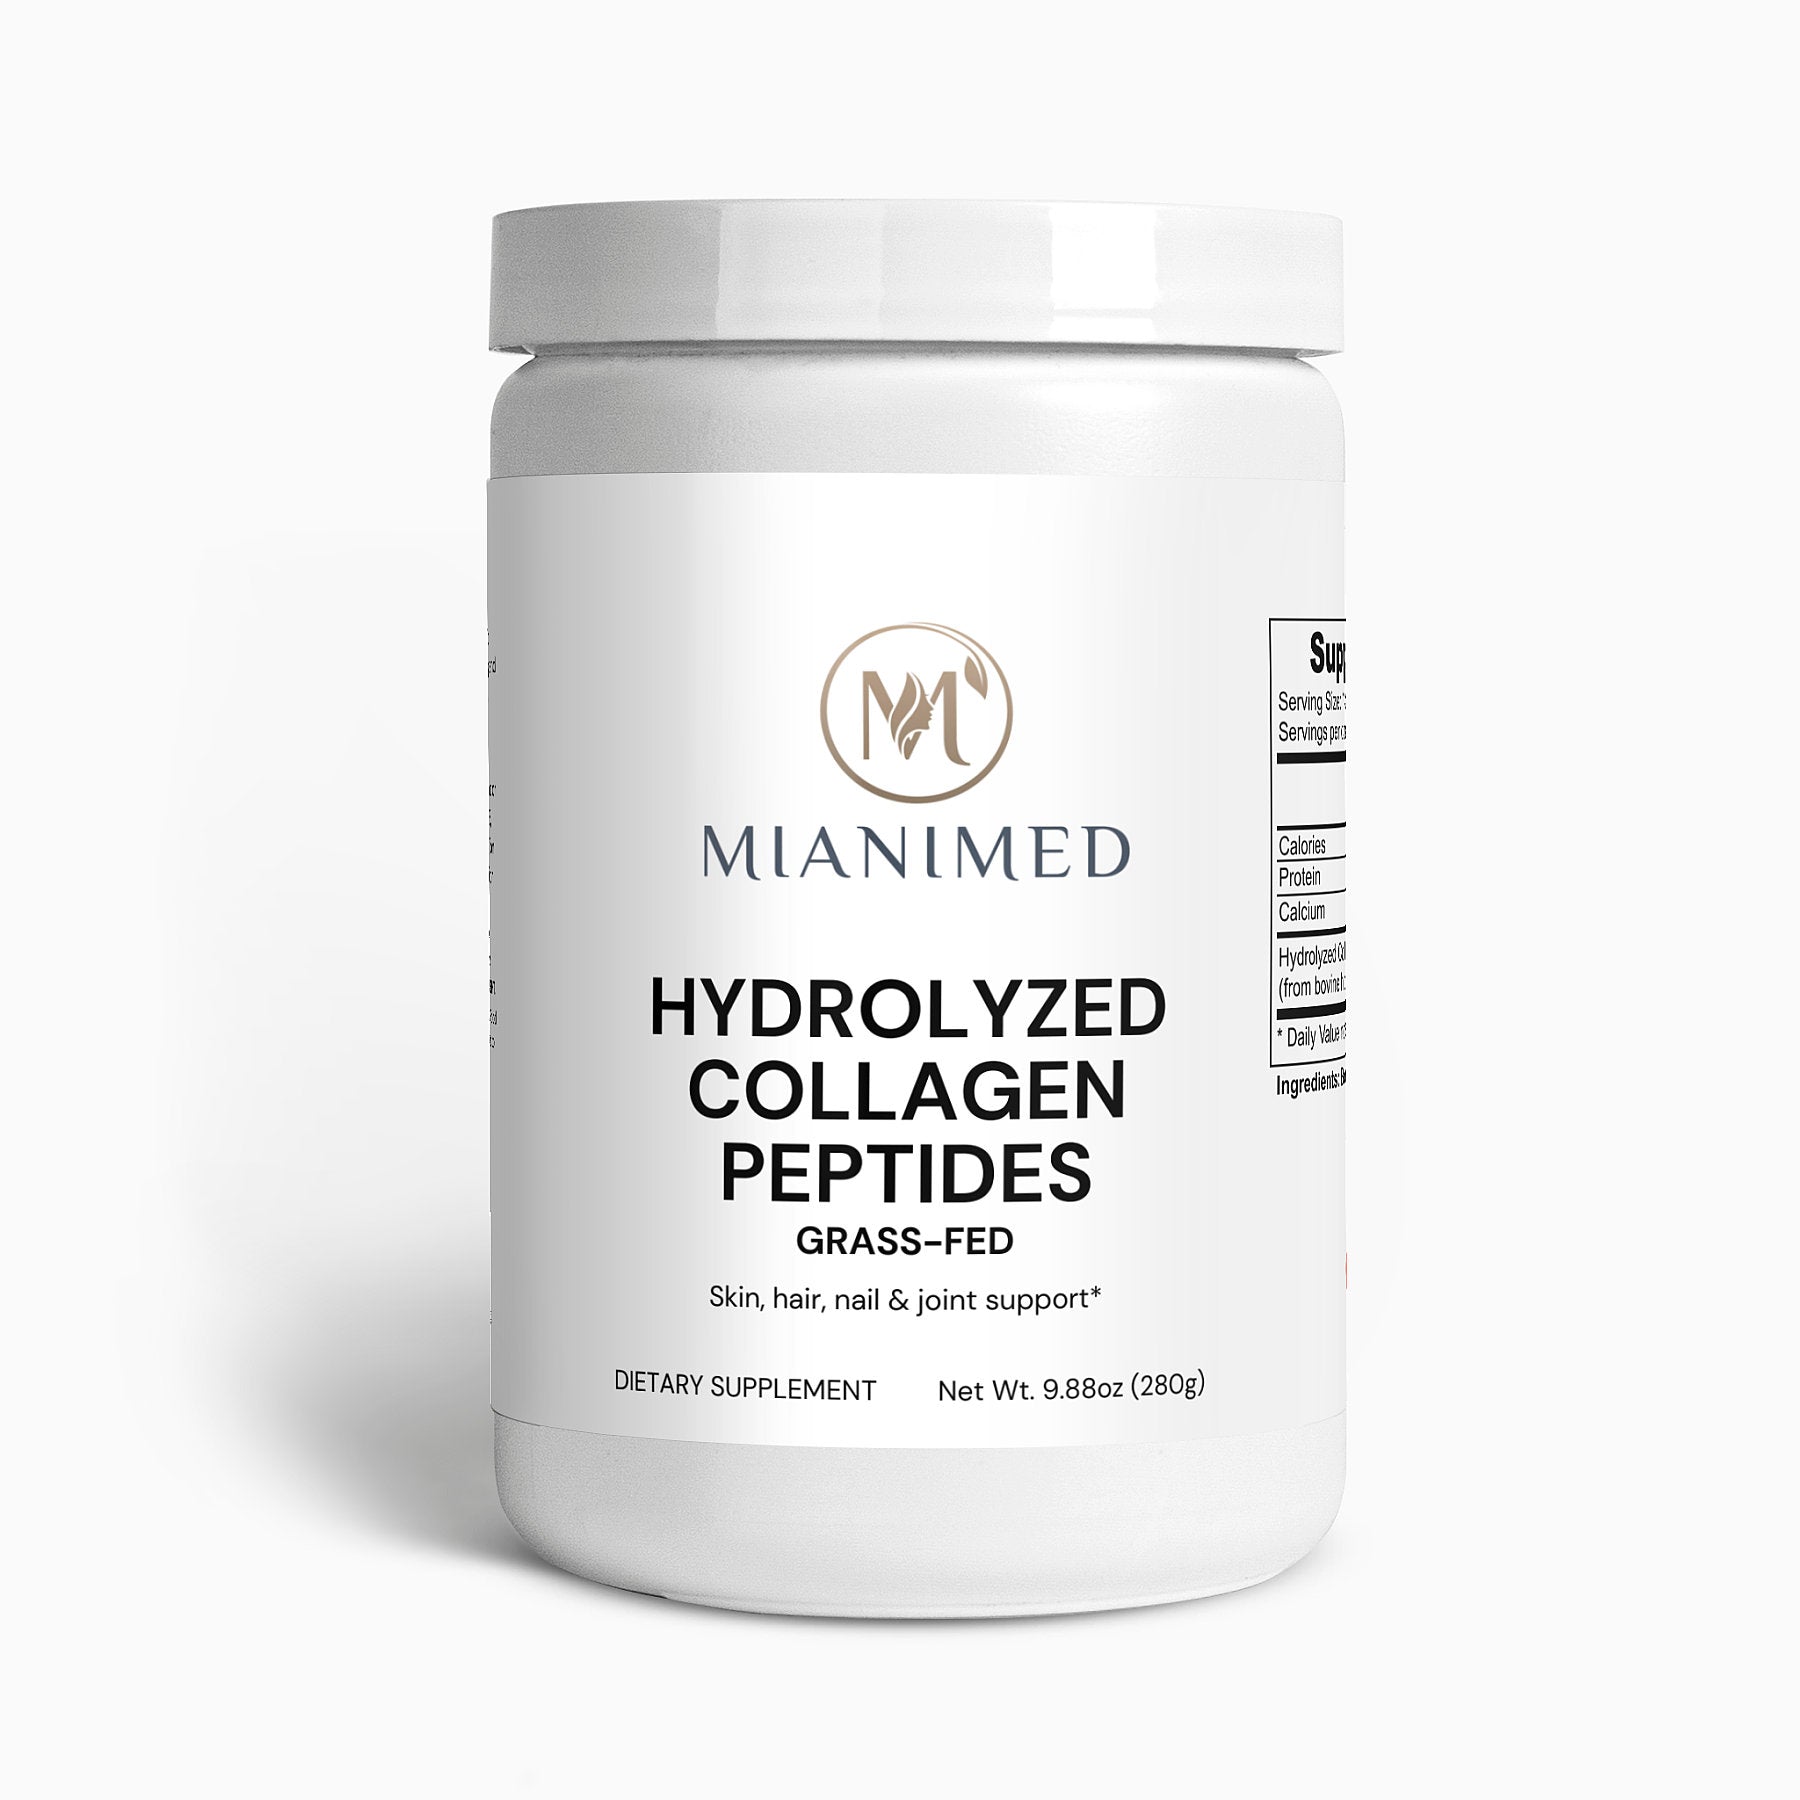 Grass-Fed Hydrolyzed Collagen Peptides - MIANIMED